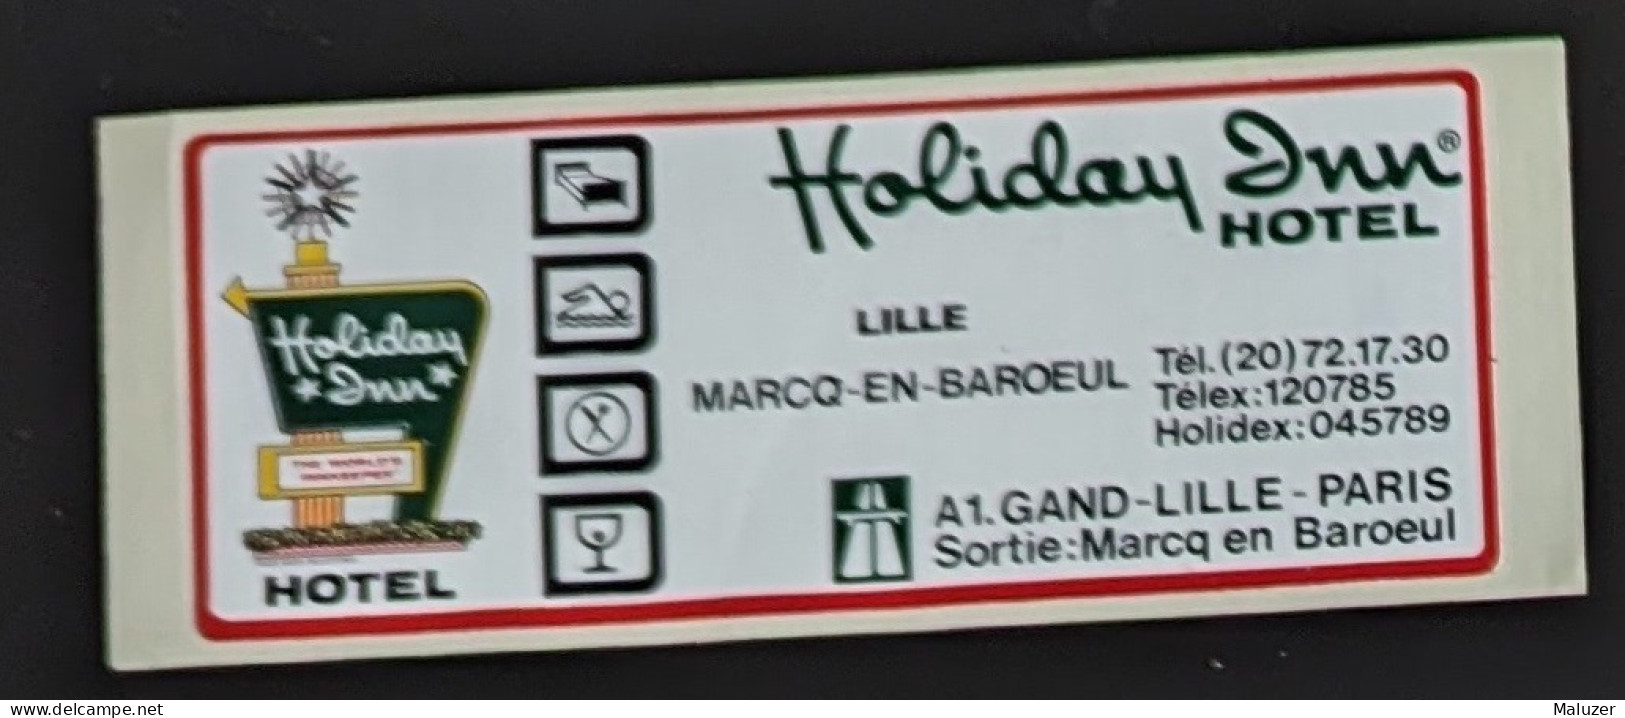 AUTOCOLLANT HOLIDAY INN - HÔTEL -LILLE MARCQ EN BAROEUL -59 NORD - Stickers